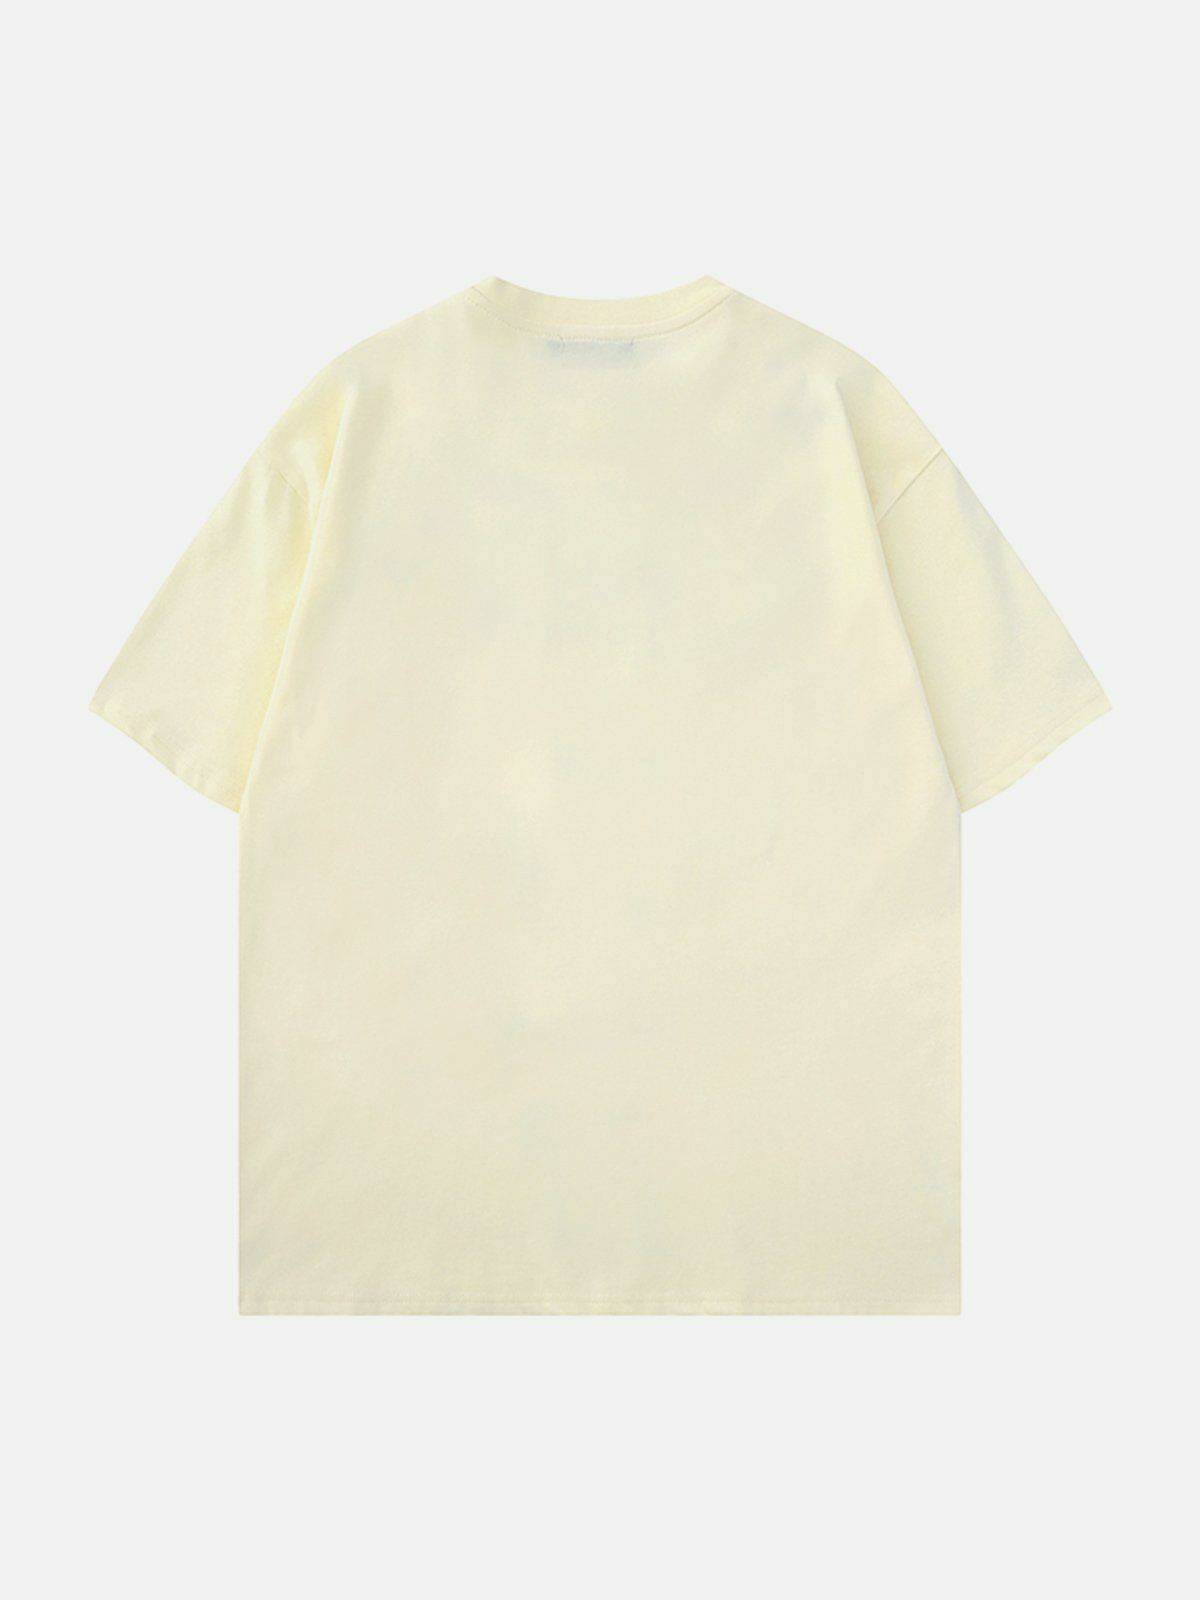 iconic rabbit lettered tee retro  edgy streetwear shirt 5052